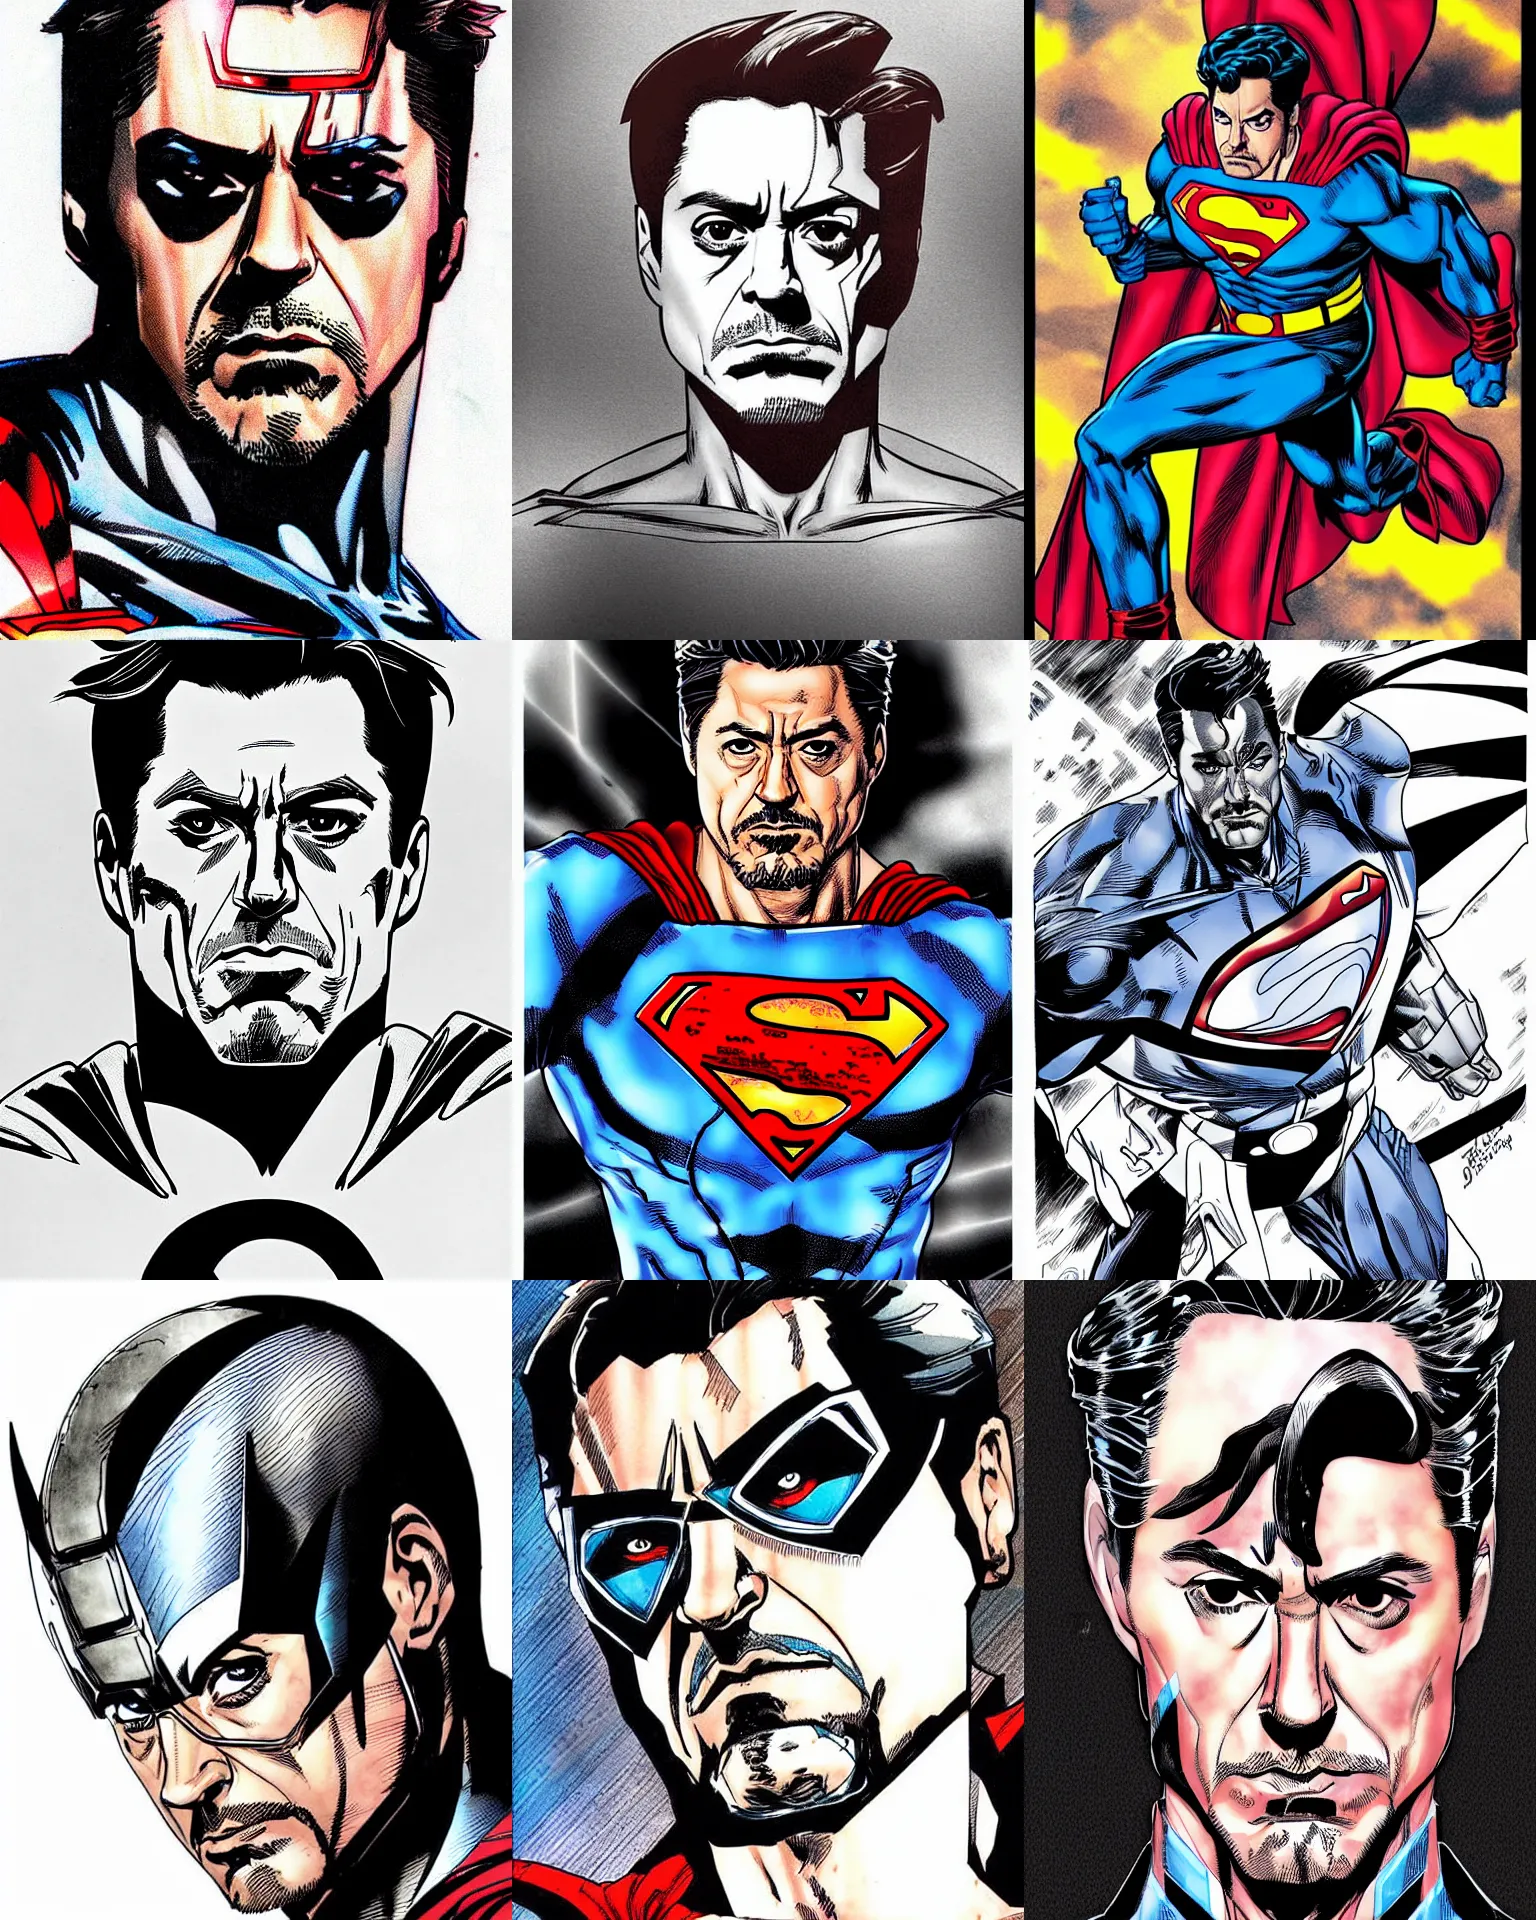 Prompt: robert downey jr!!! jim lee!!! flat ink sketch by jim lee face close up headshot superman costume in the style of jim lee, x - men superhero comic book character by jim lee